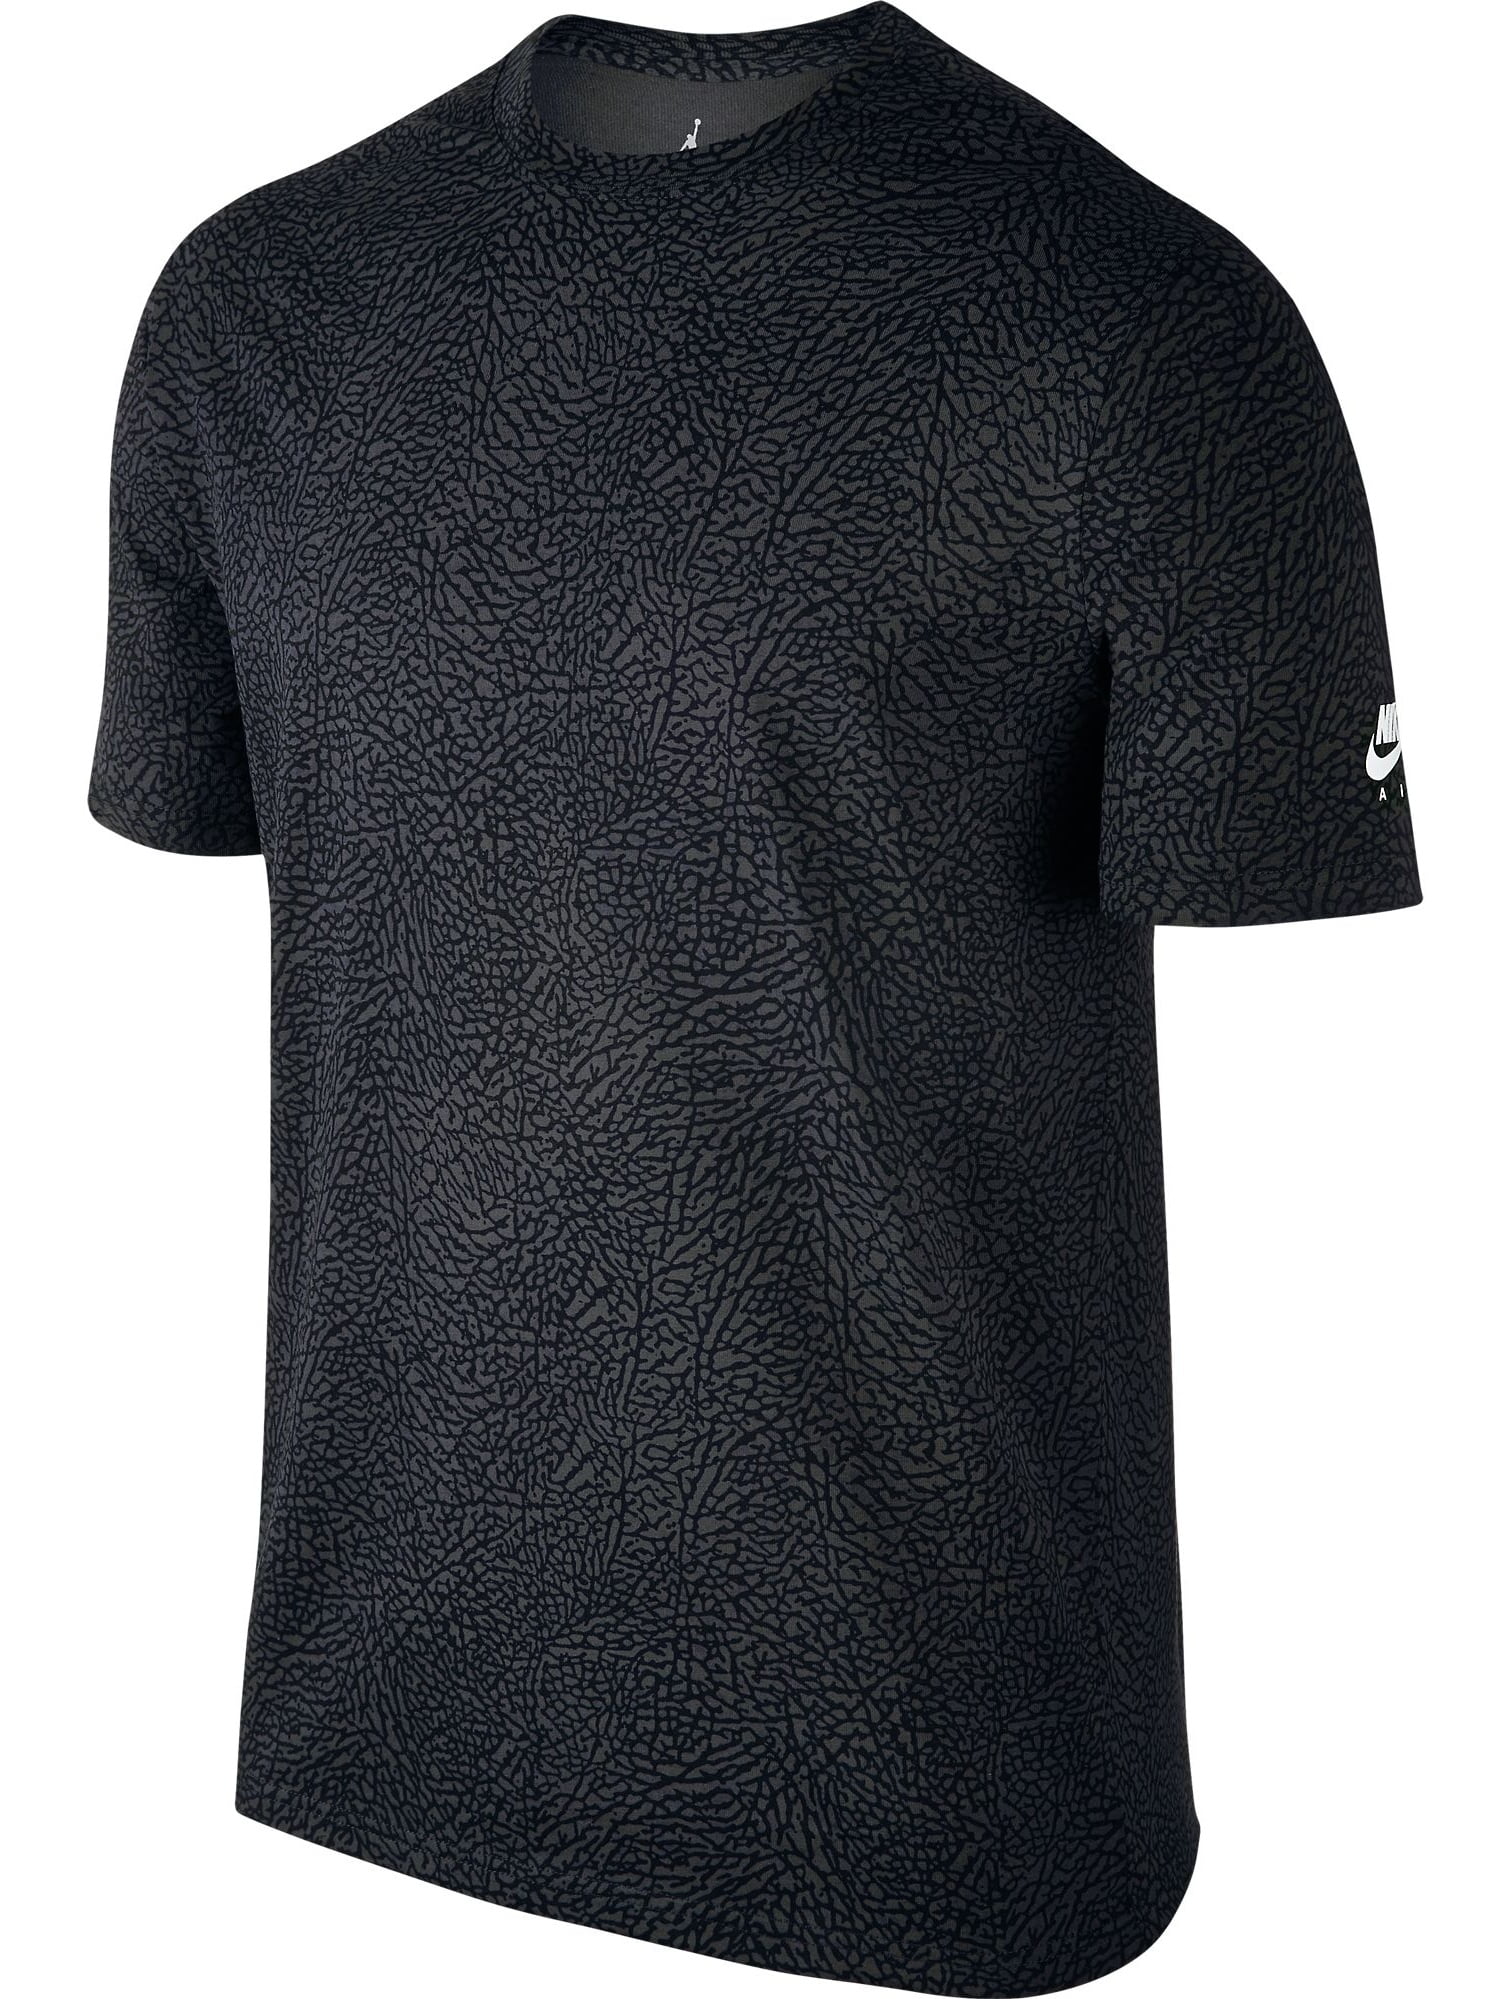 Jordan - Air Jordan 3 Elephant Print Men's T-Shirt Anthracite/Black ...